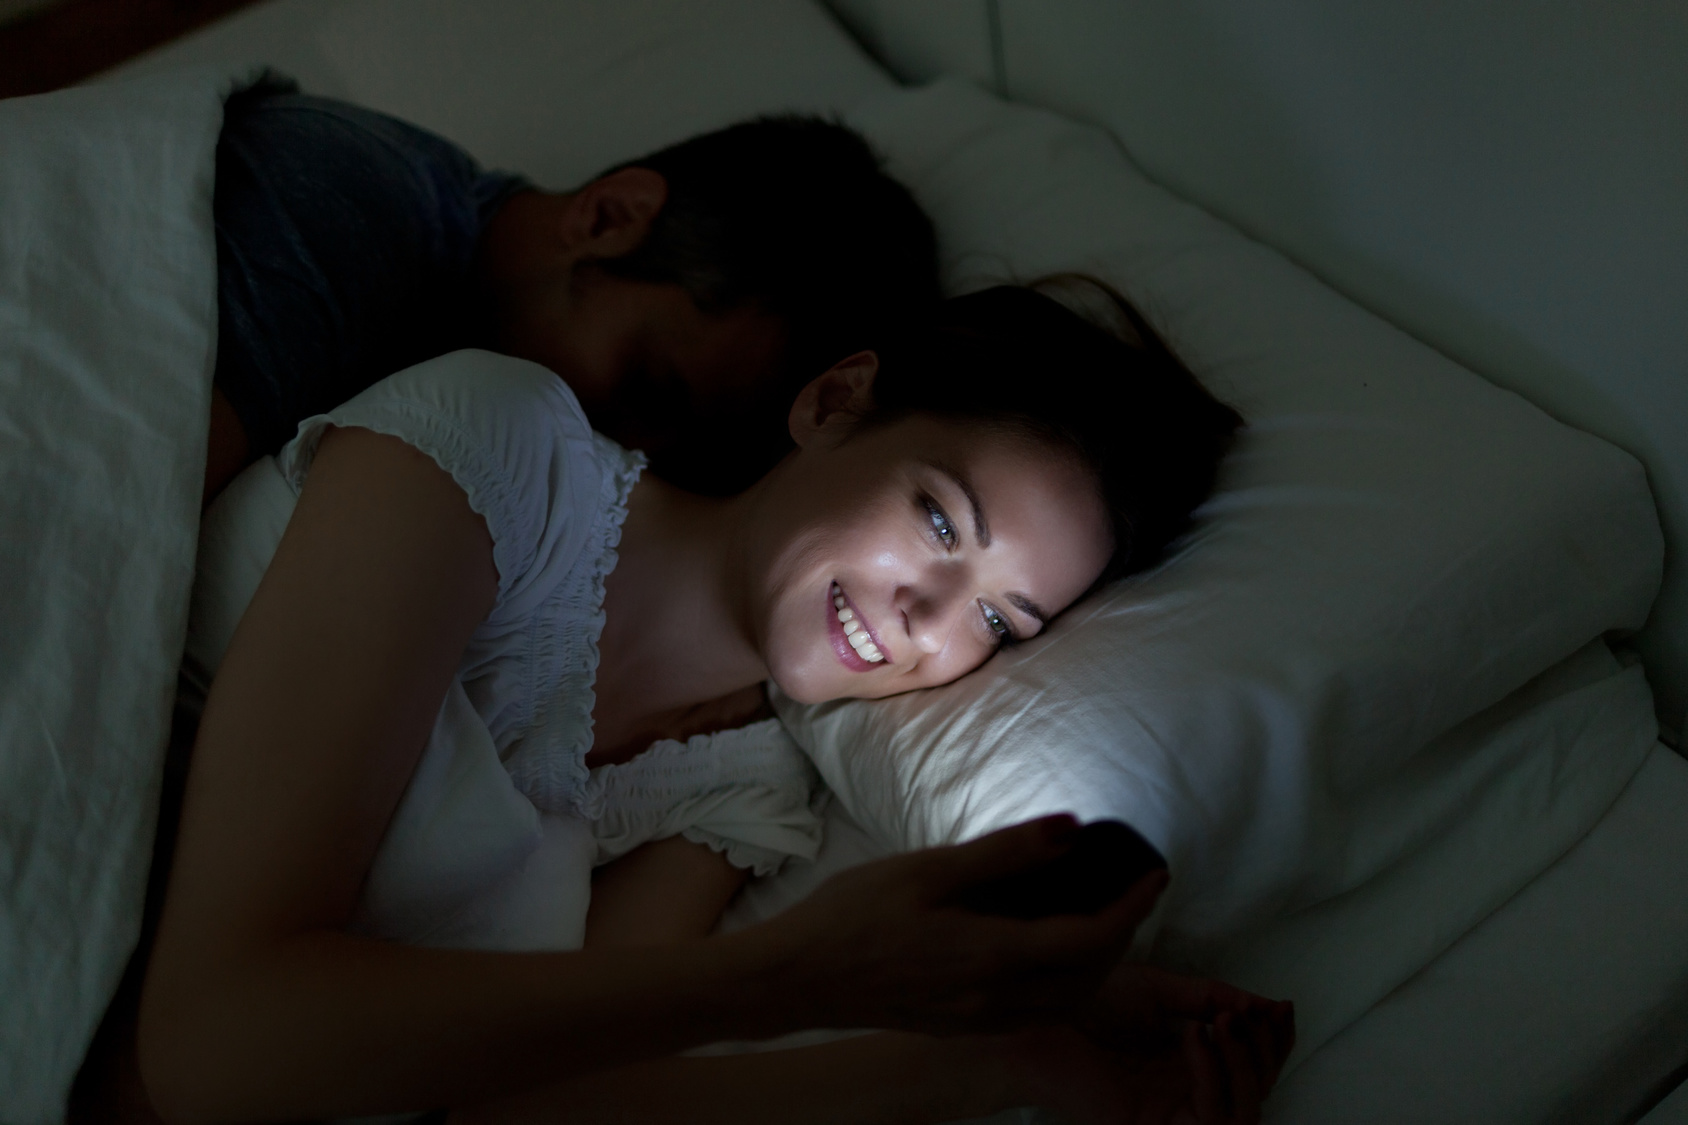 Young woman using mobile phone, while husband asleep